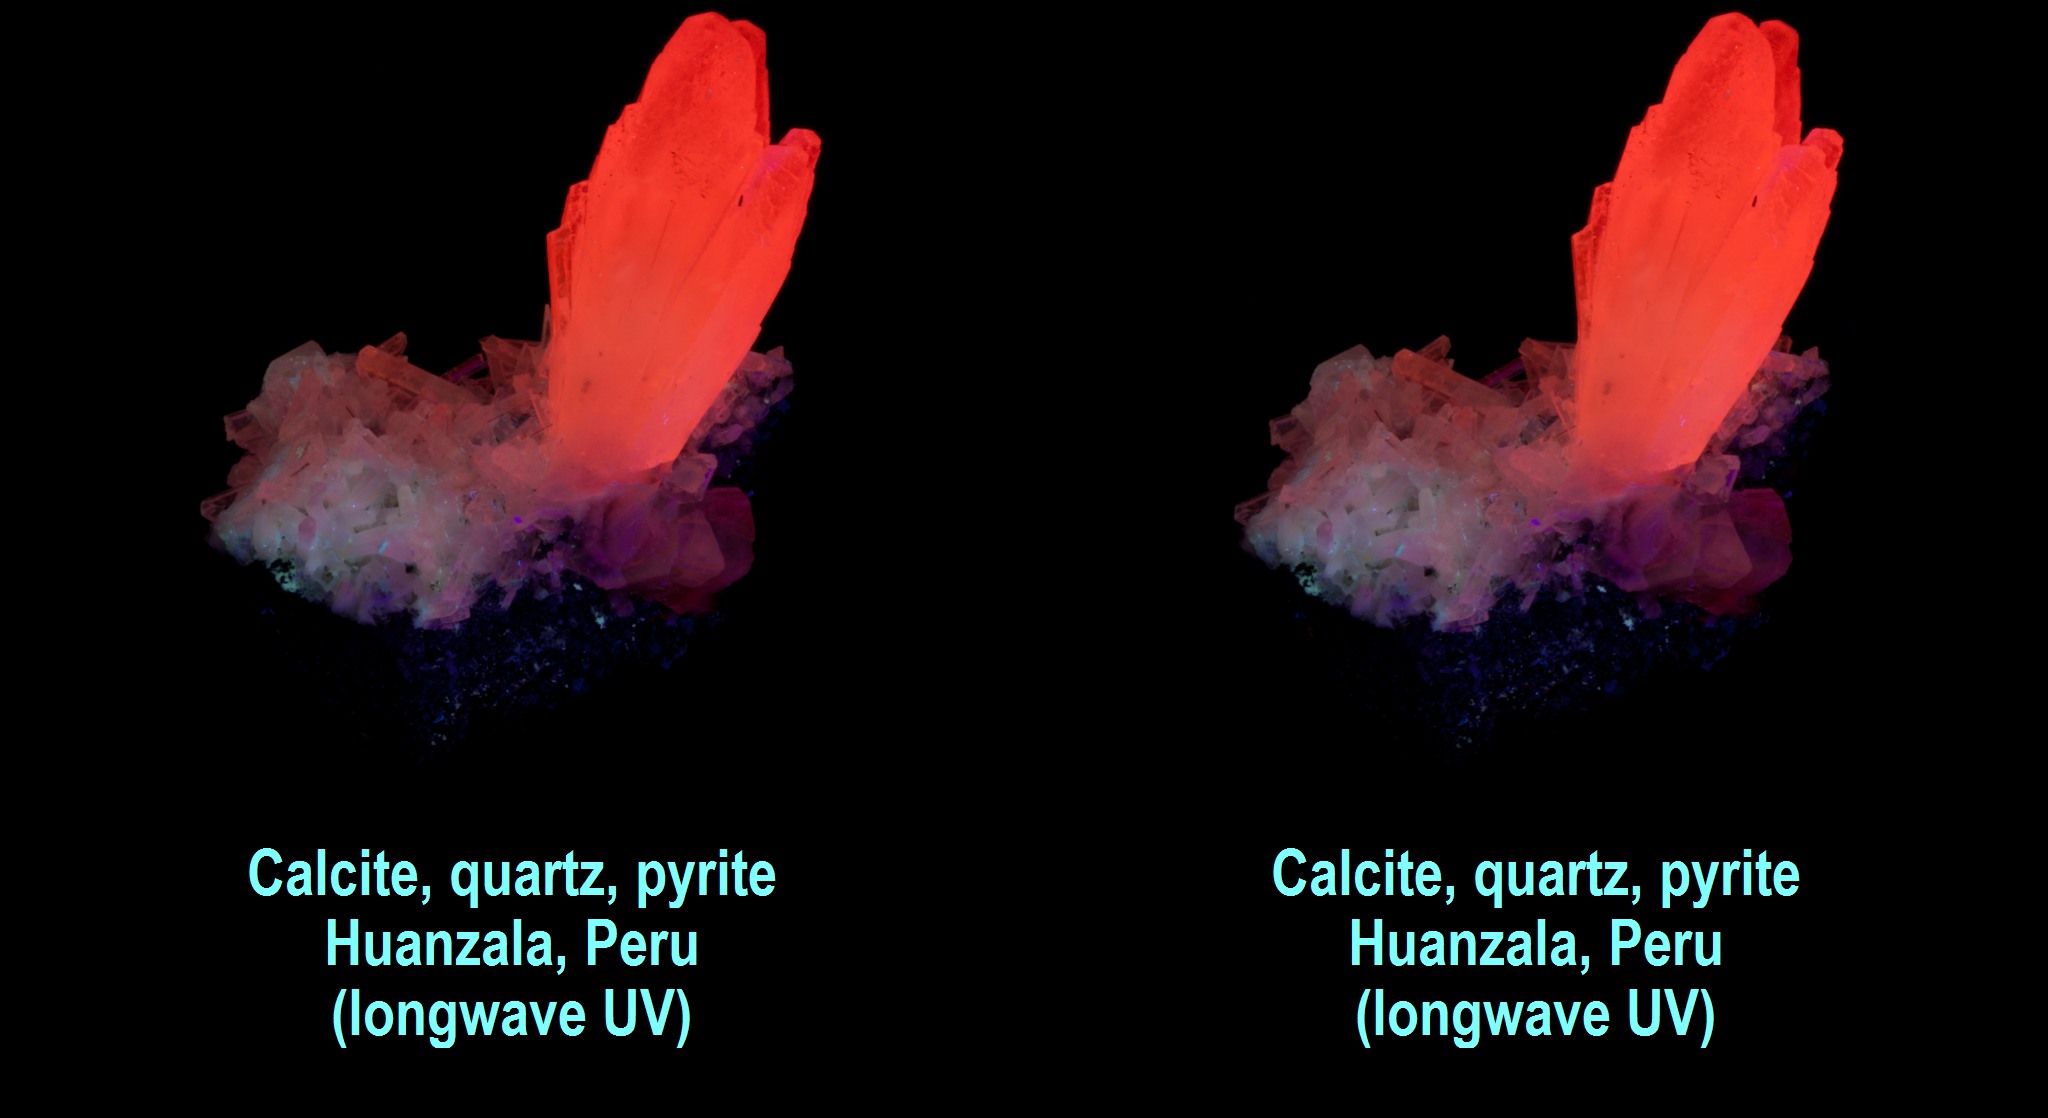 Calcite, quartz, pyrite - Huanzala, Peru - calcite fluorescent red under UV